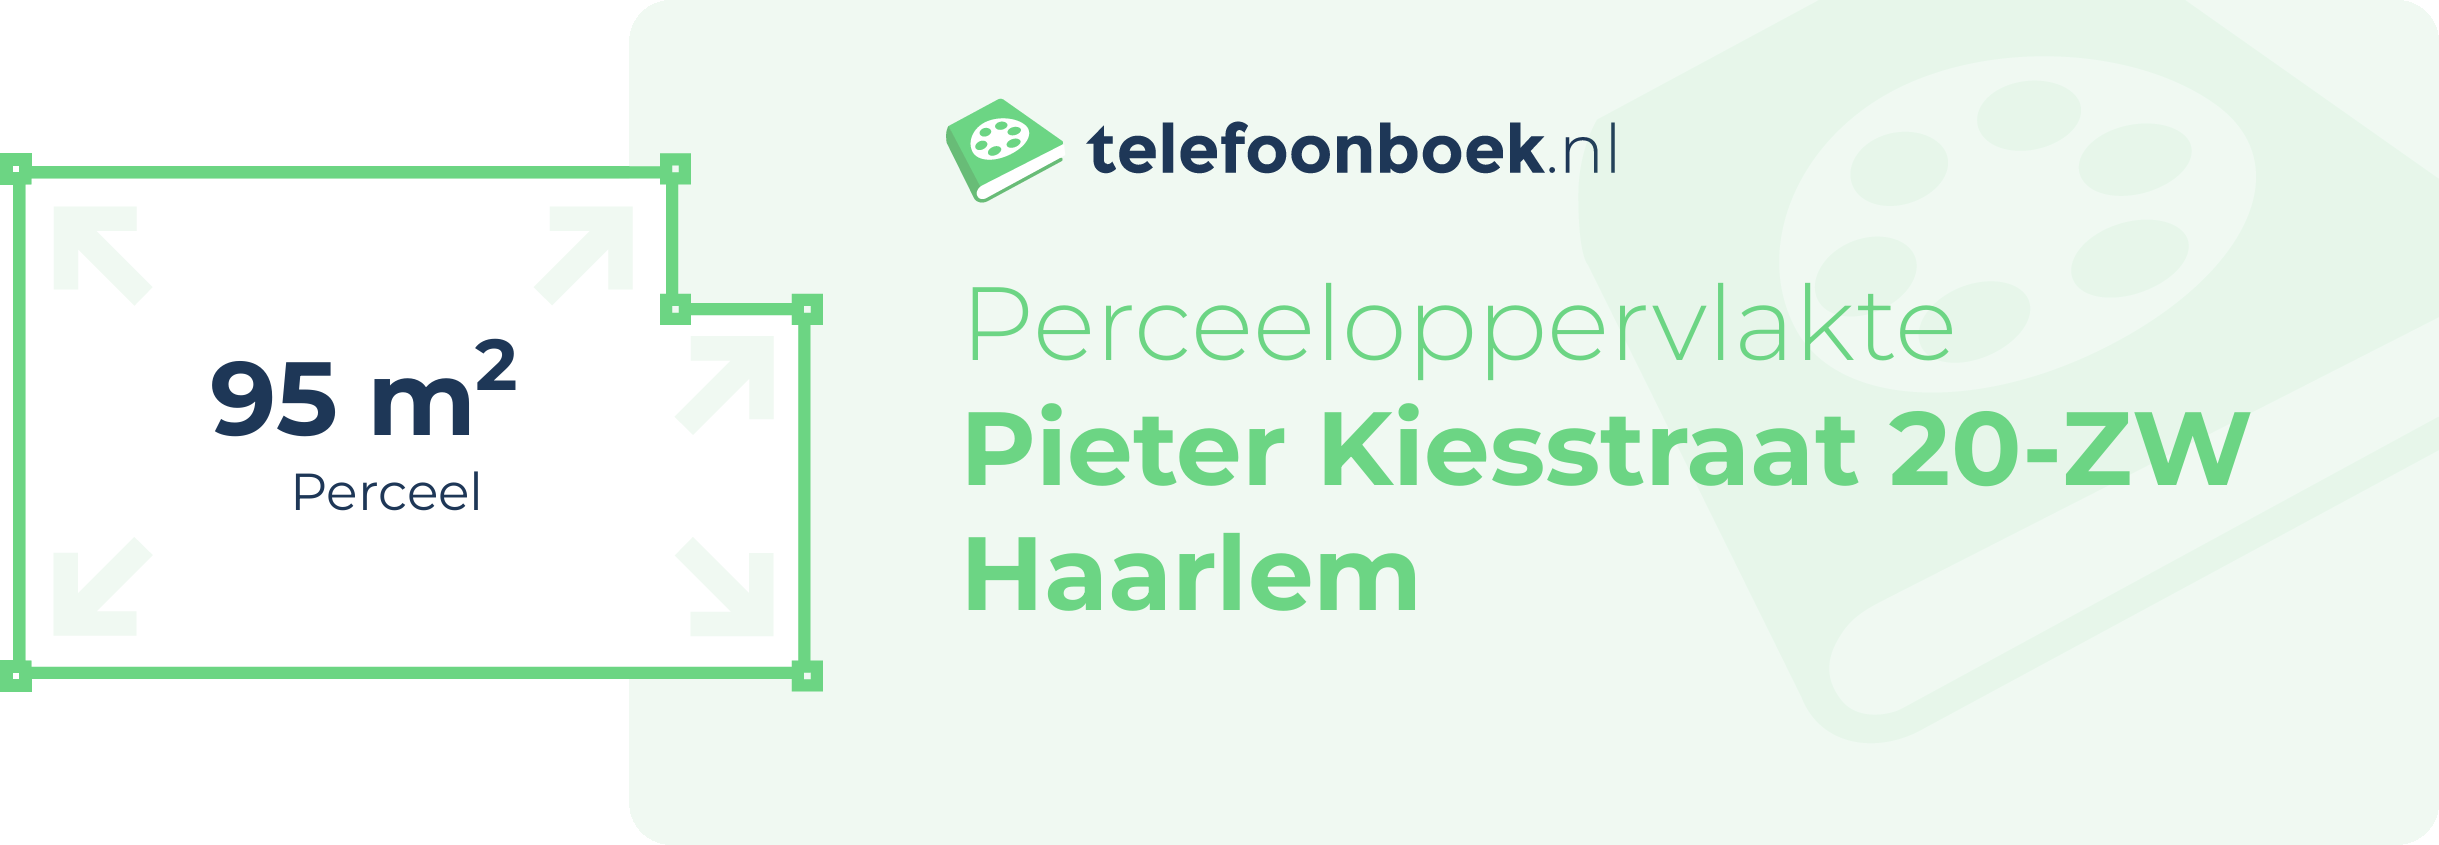 Perceeloppervlakte Pieter Kiesstraat 20-ZW Haarlem